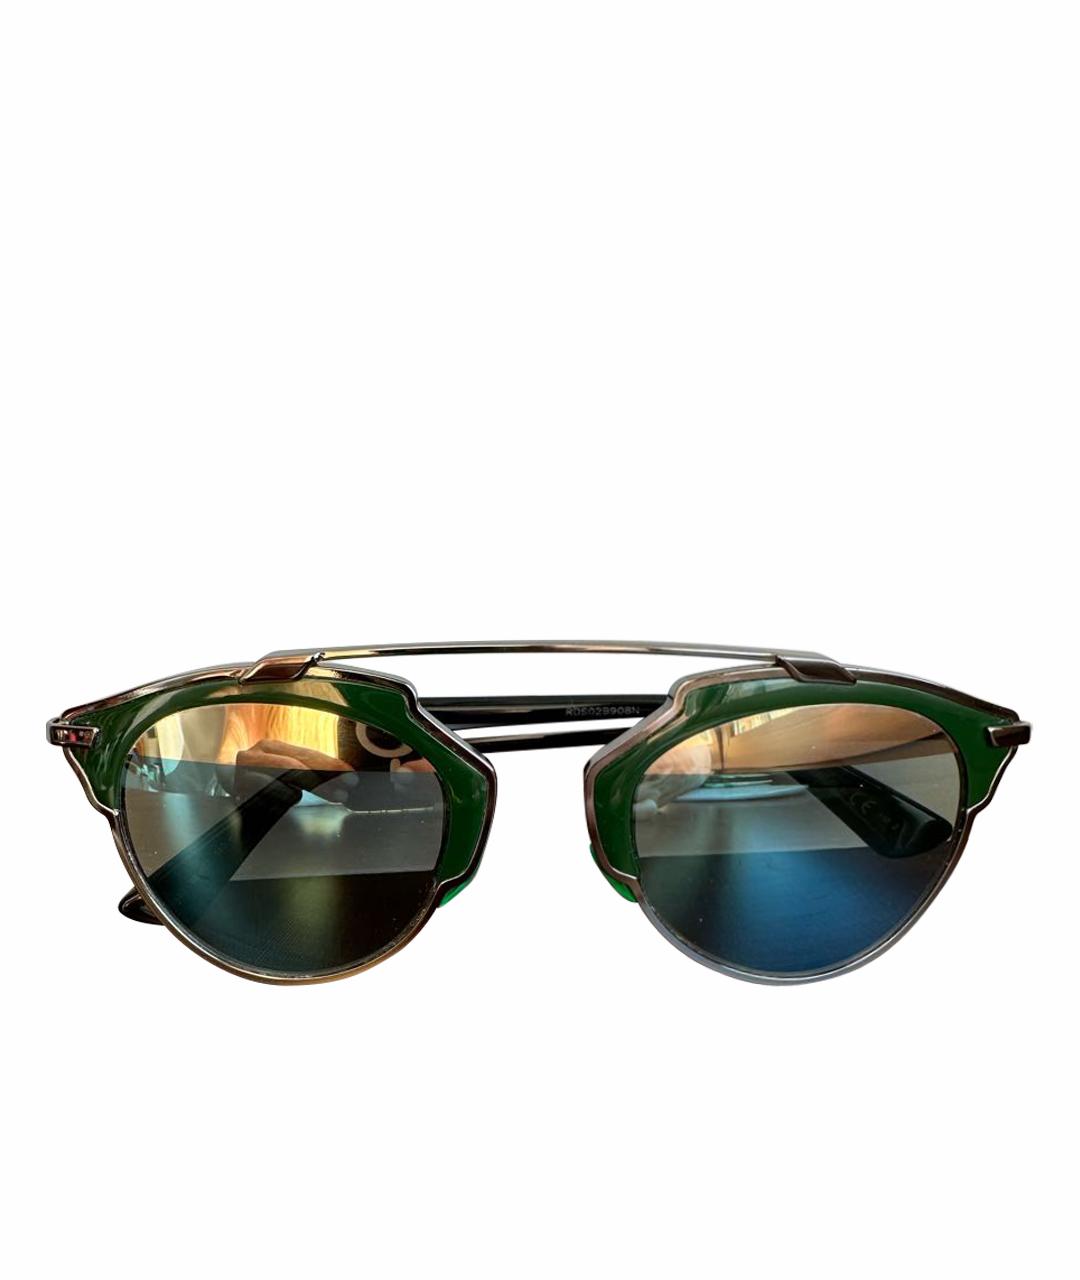 CHRISTIAN DIOR PRE-OWNED Зеленые солнцезащитные очки, фото 1